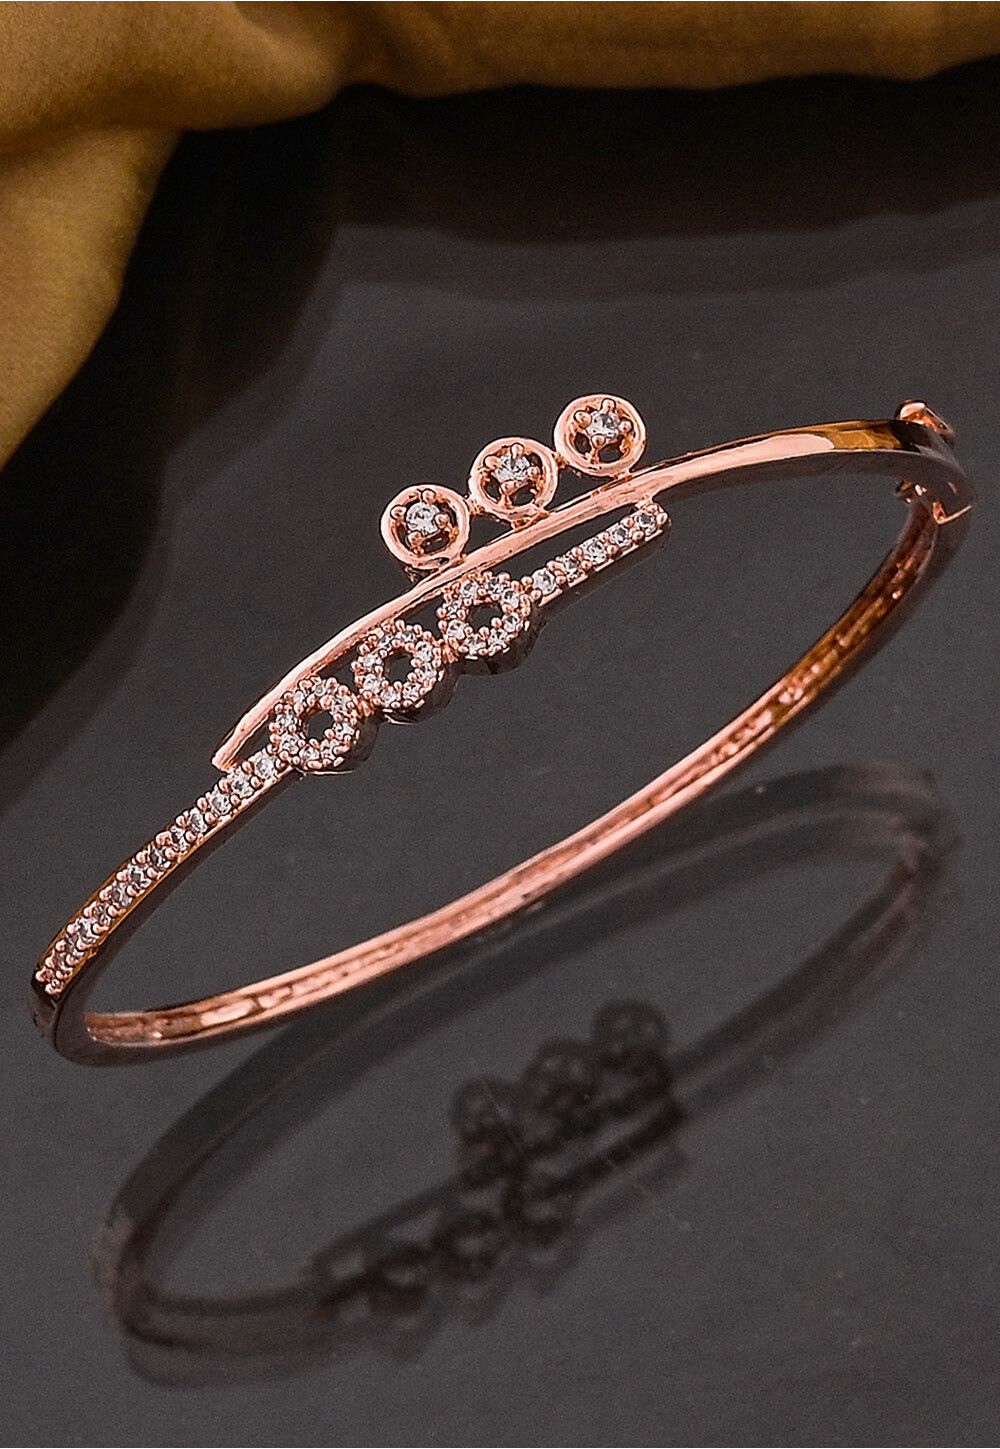 Dropship Luxury Women Plated Rose Gold Watch Fashion Ladies Quartz Diamond  Wristwatch Elegant Female Bracelet Watches 2pcs Set to Sell Online at a  Lower Price | Doba